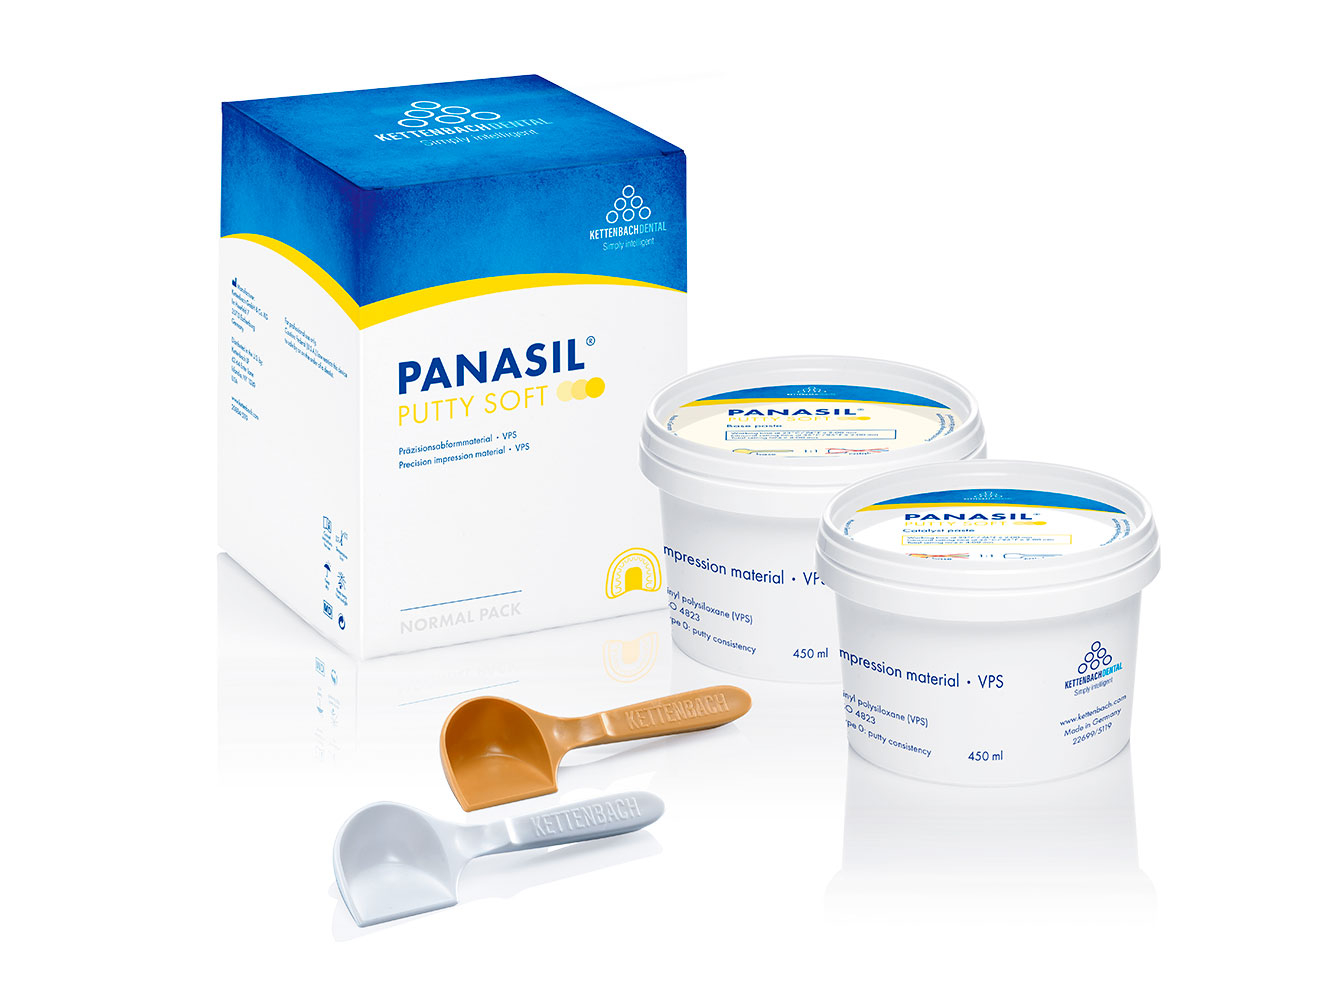 11121 Panasil Putty soft Стоматологический оттискный материал, Kettenbach (Германия)